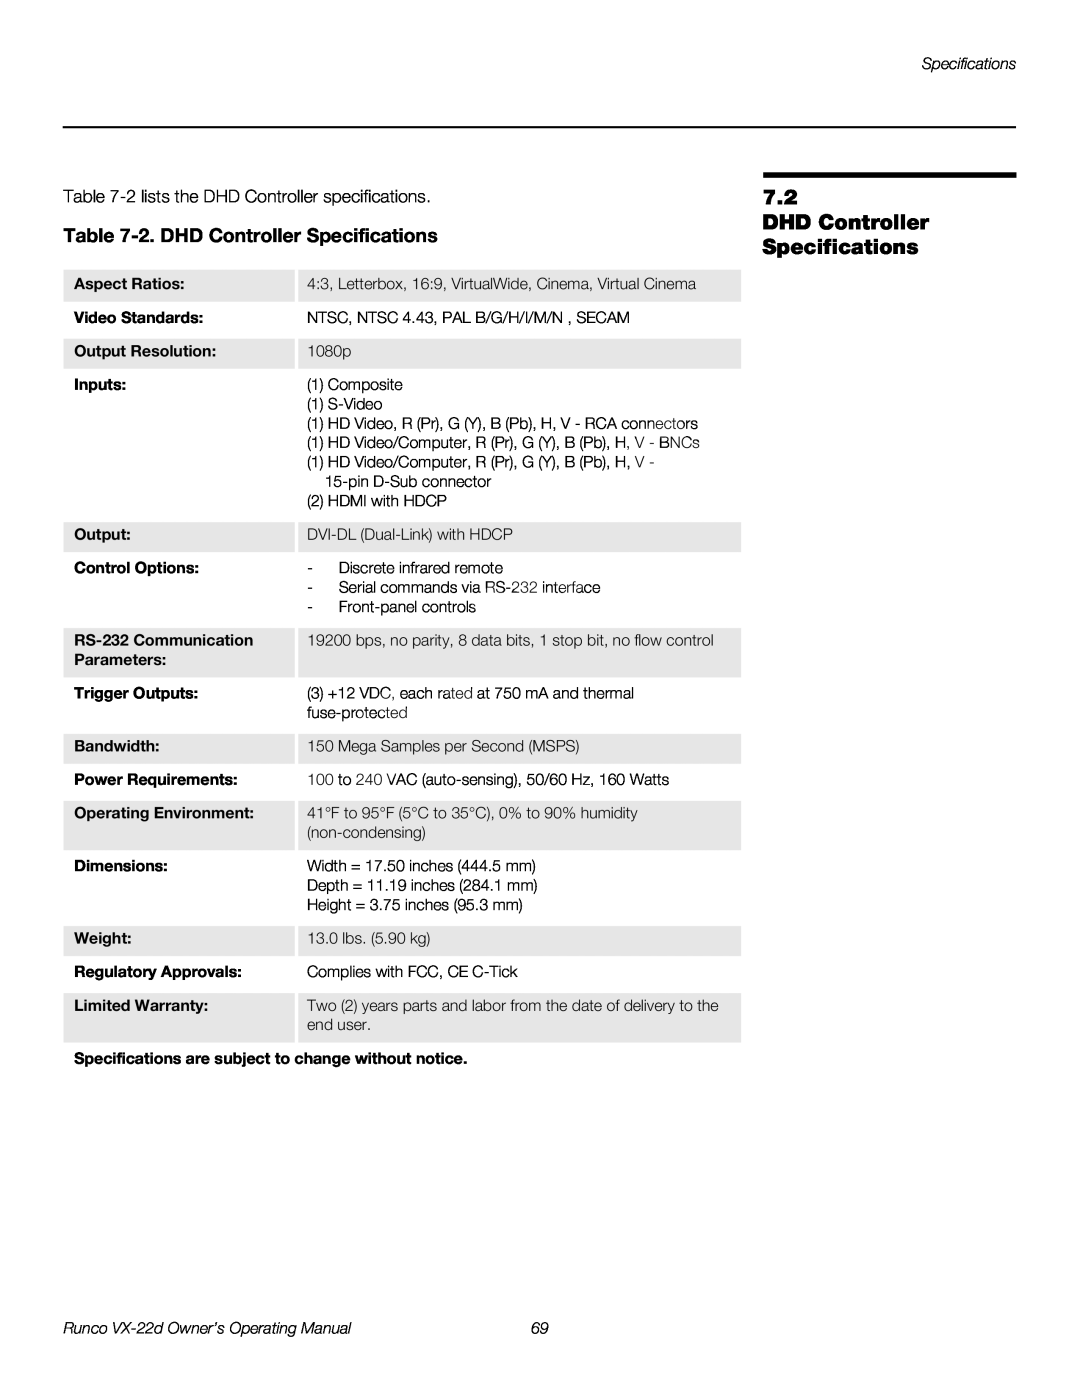 Runco VX-22D manual 2. DHD Controller Specifications, Runco VX-22d Owner’s Operating Manual 